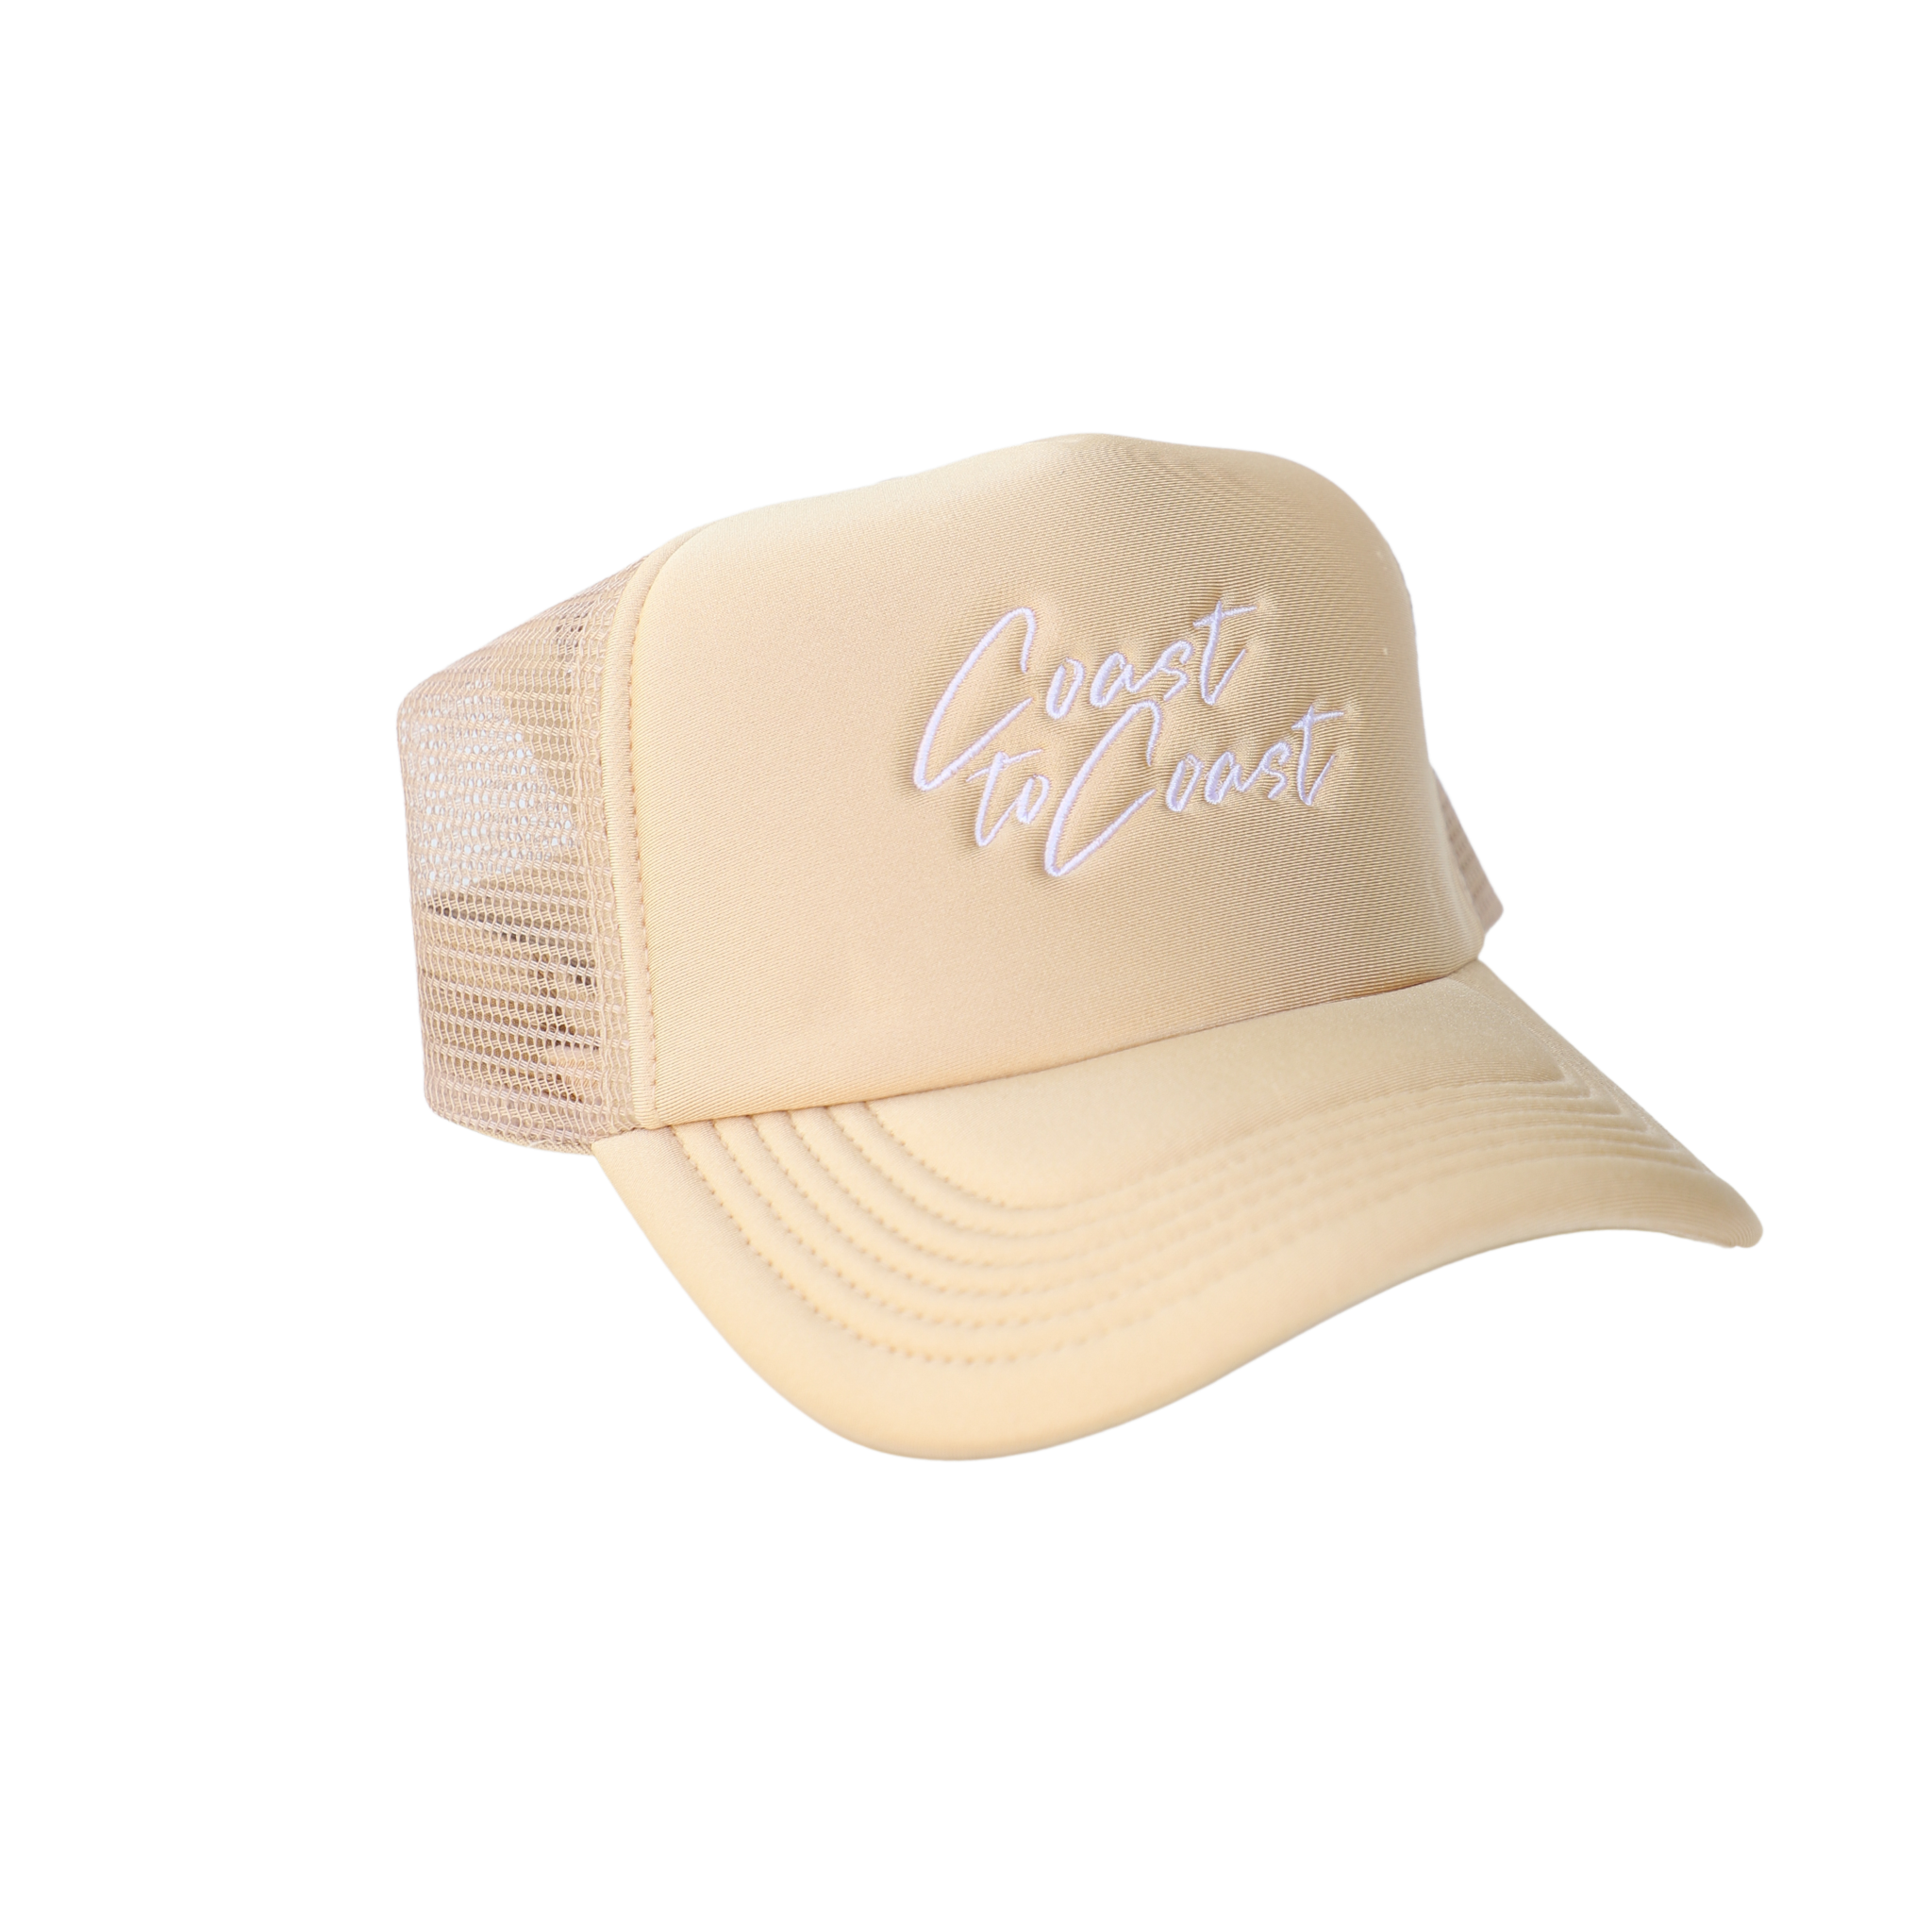 Coast to Coast Trucker Hat - Cream